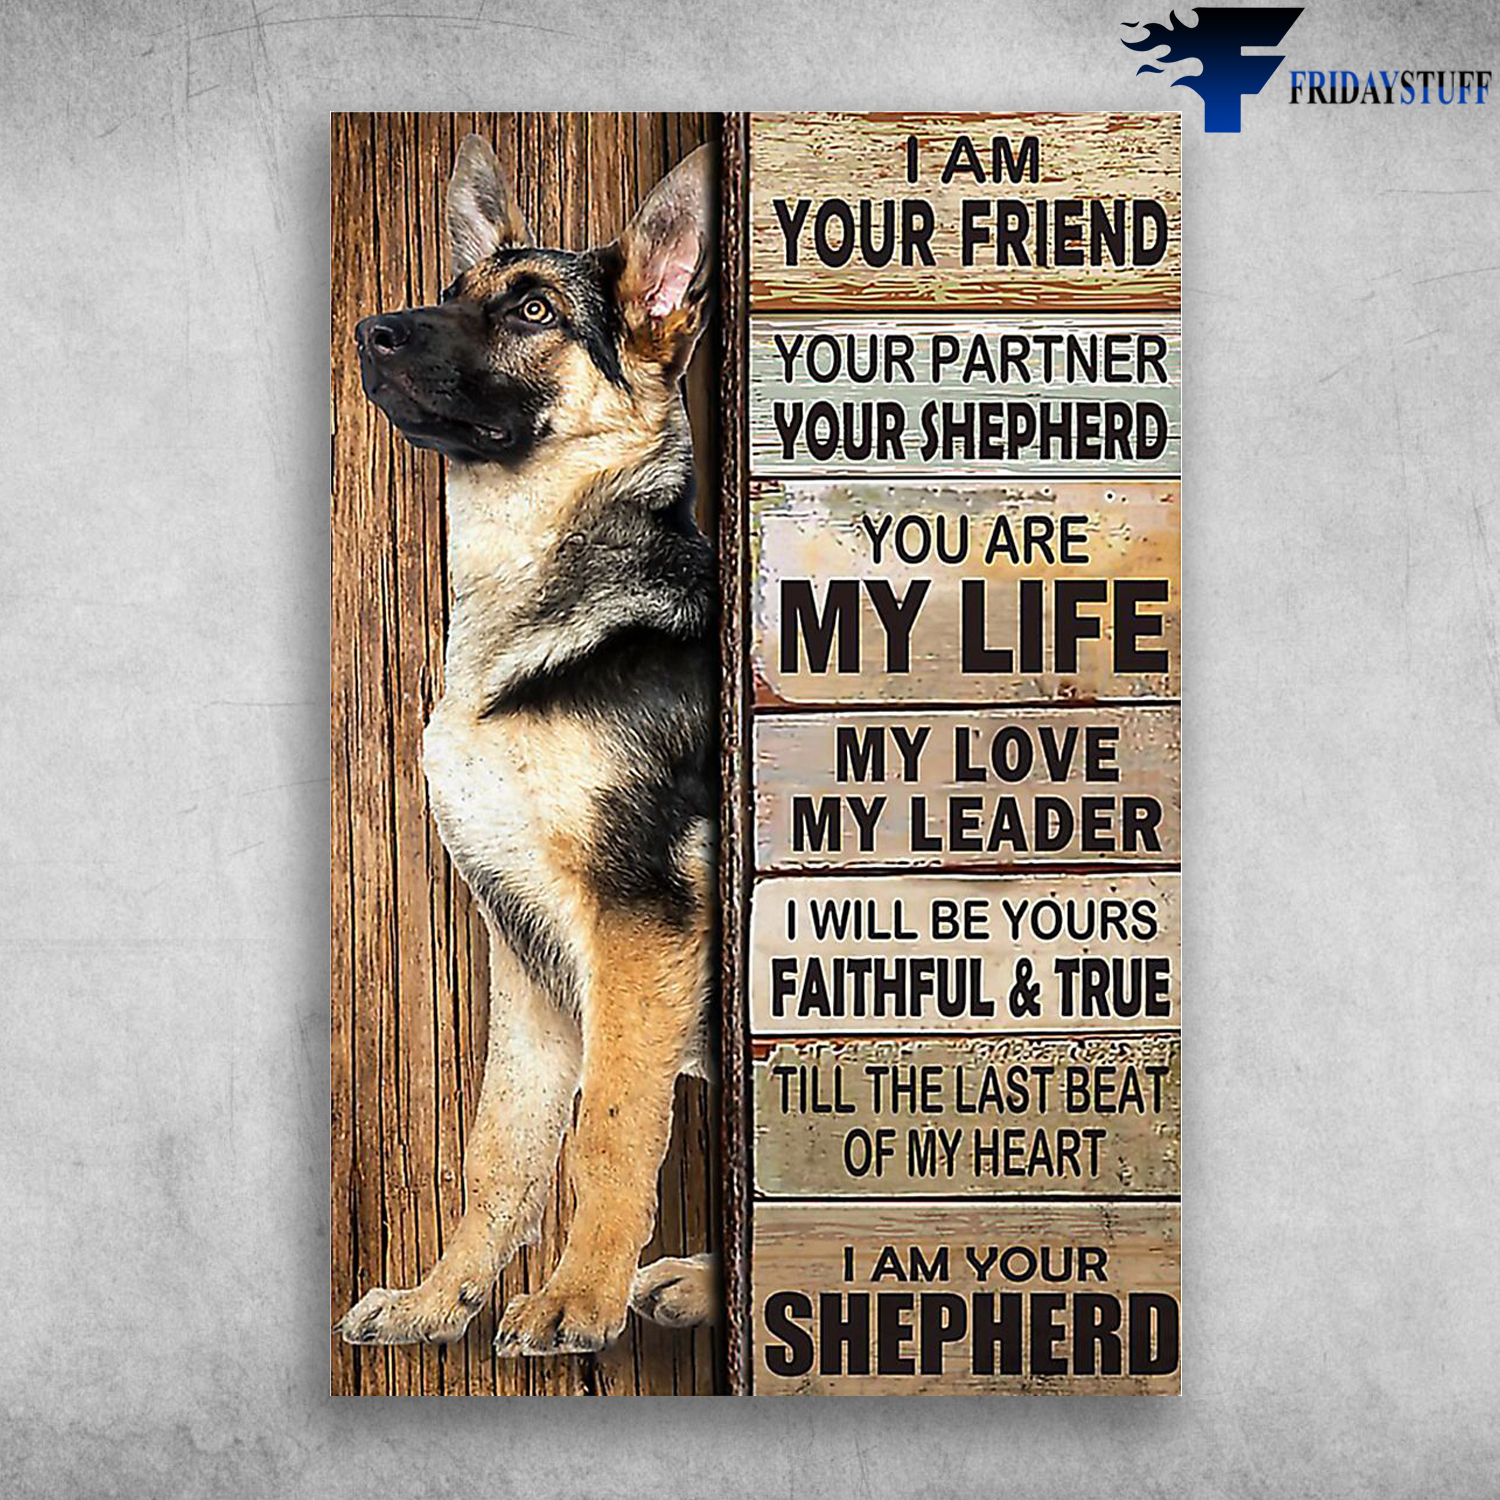 The Shepherd - I Am Your Friend, Your Partner, Your Shepherd